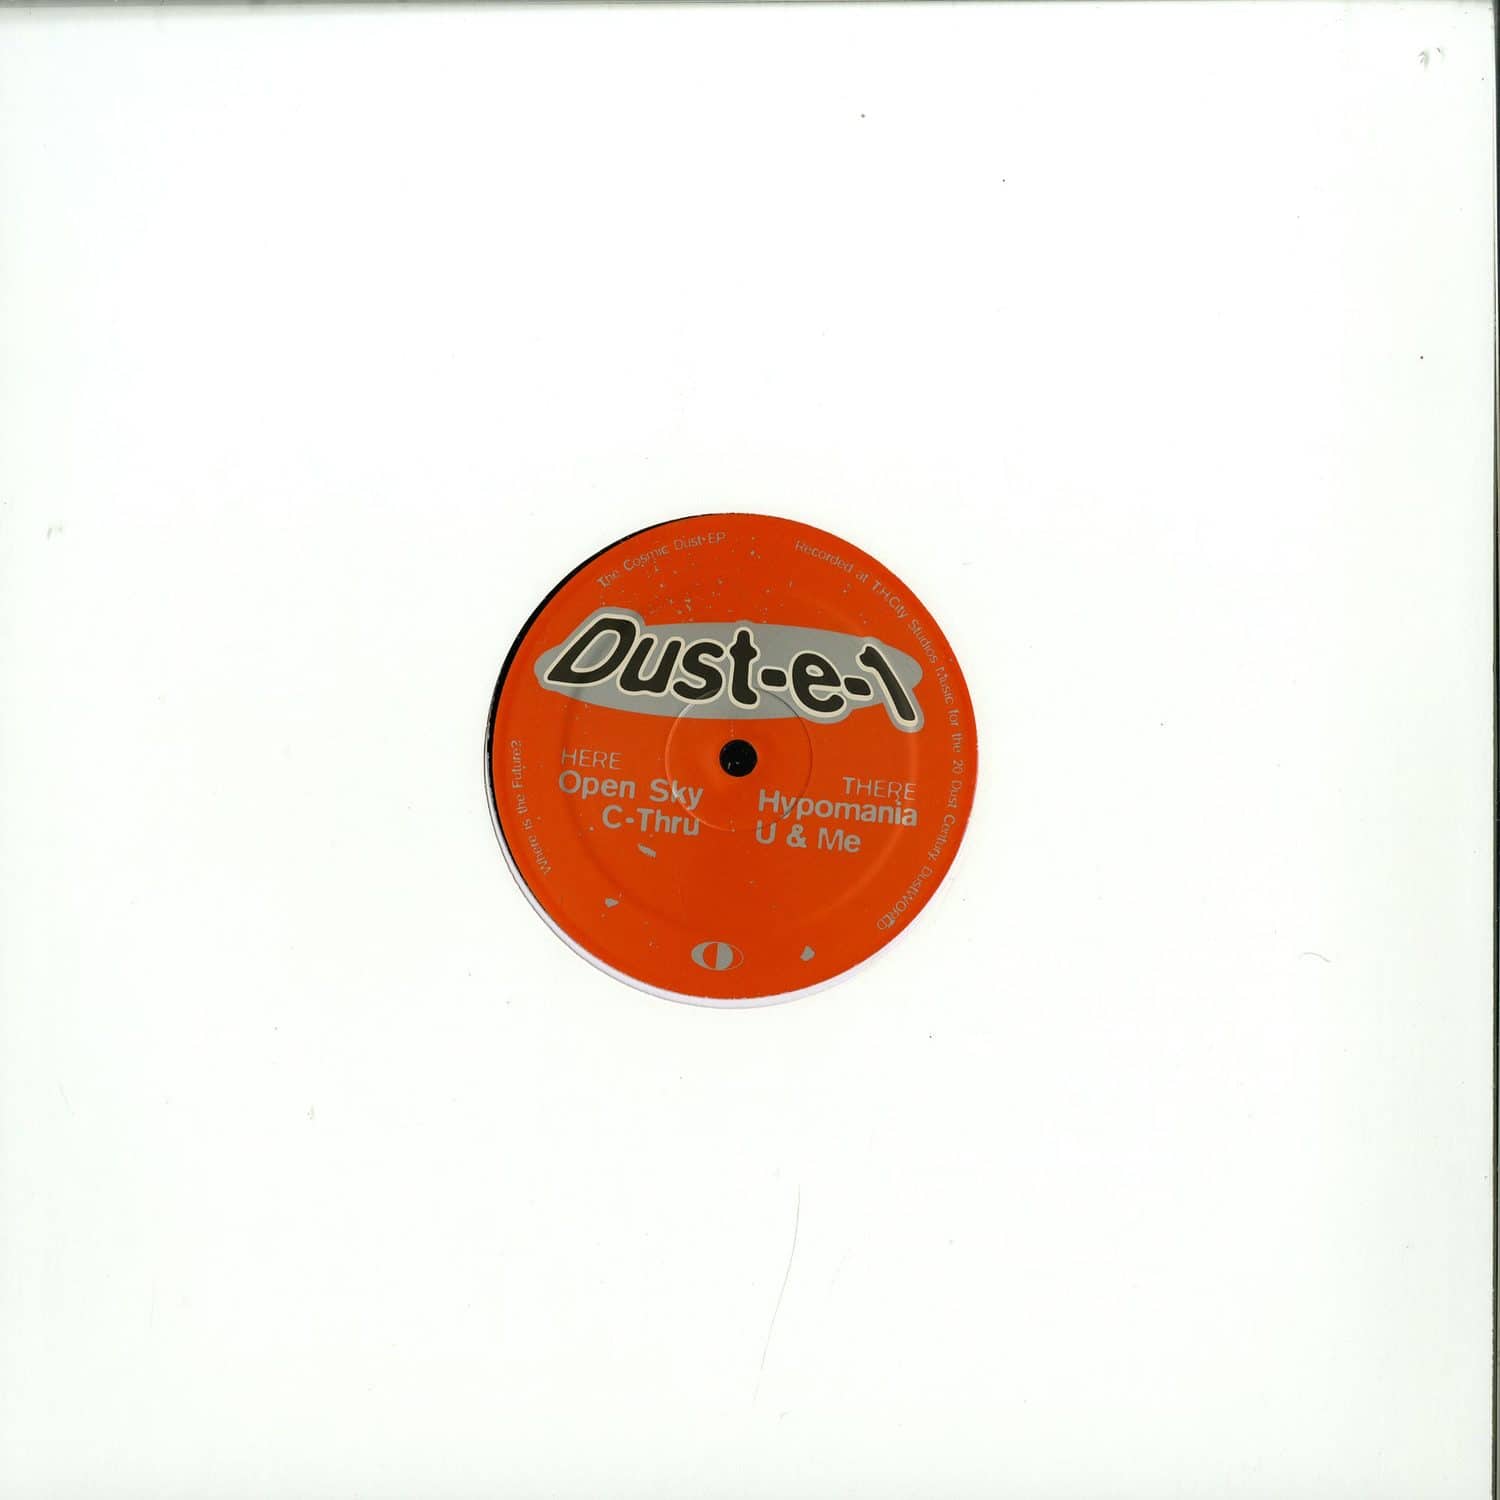 Dust-e-1 - THE COSMIC DUST EP